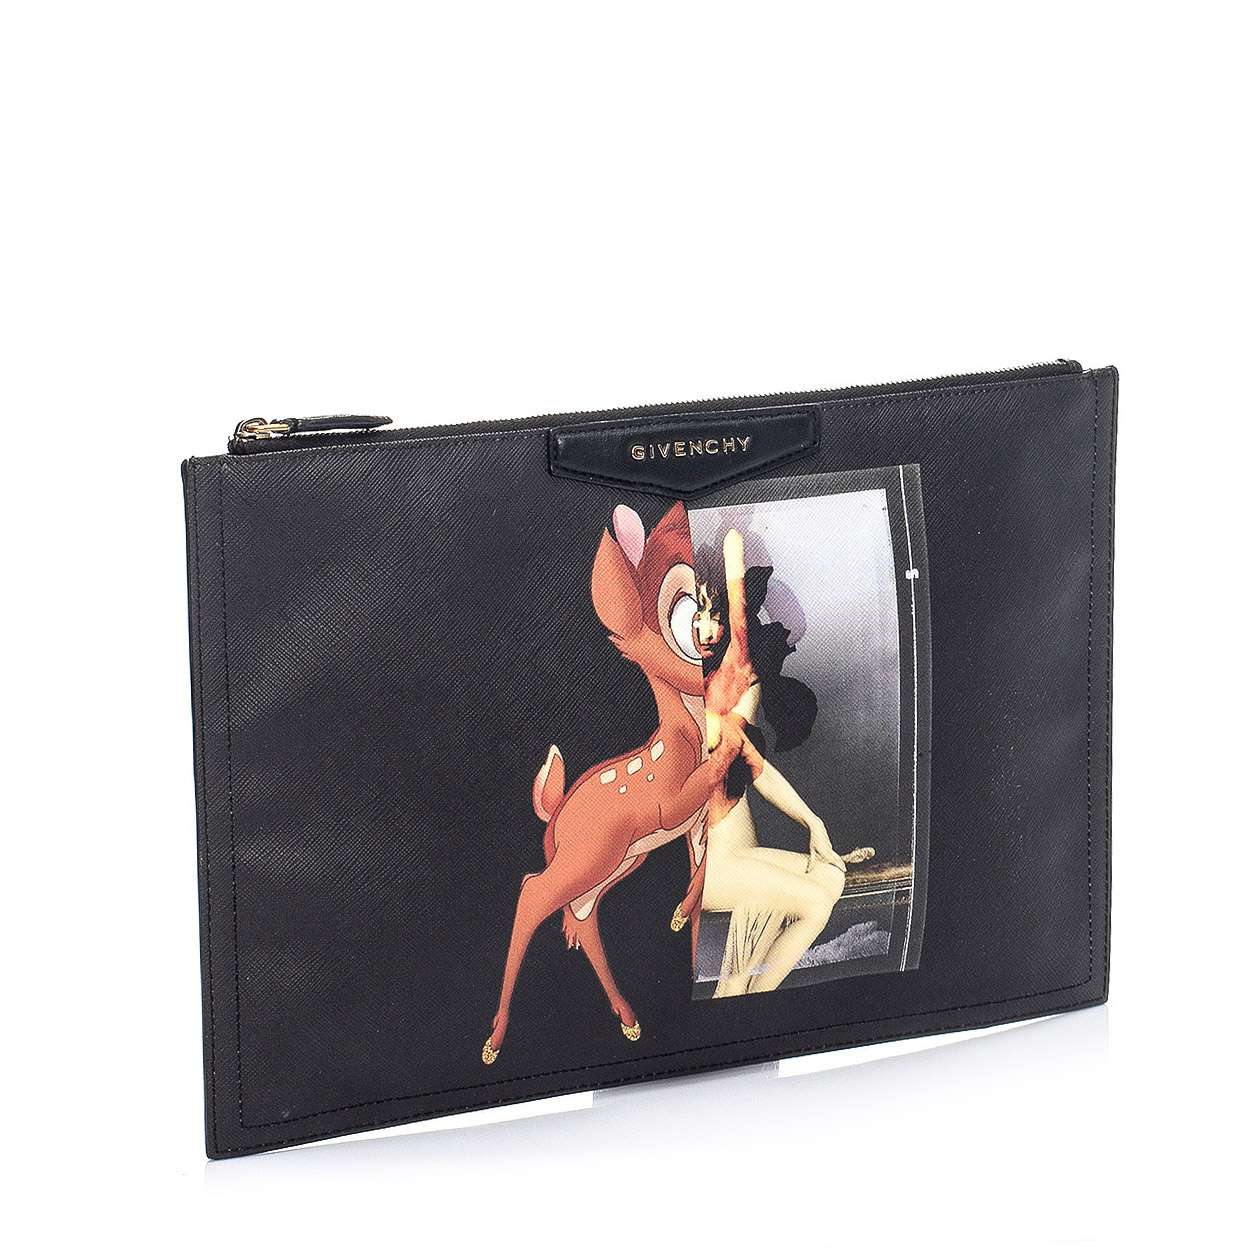 Givenchy - Black Bambi Block Antigona Textured Leather Clutch